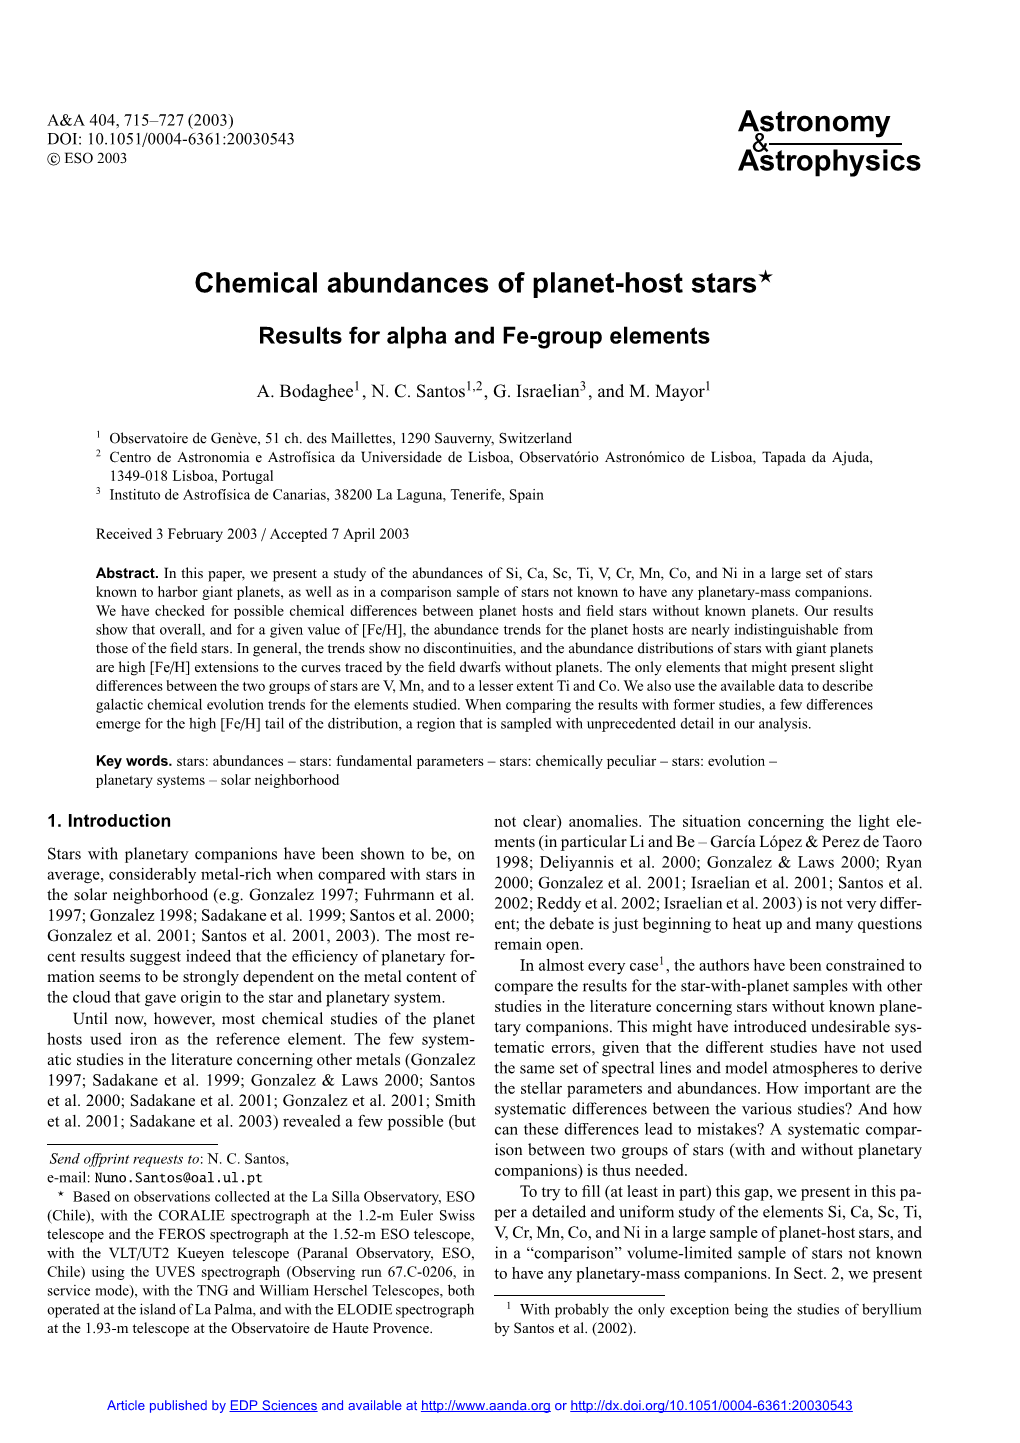 Chemical Abundances of Planet-Host Stars?